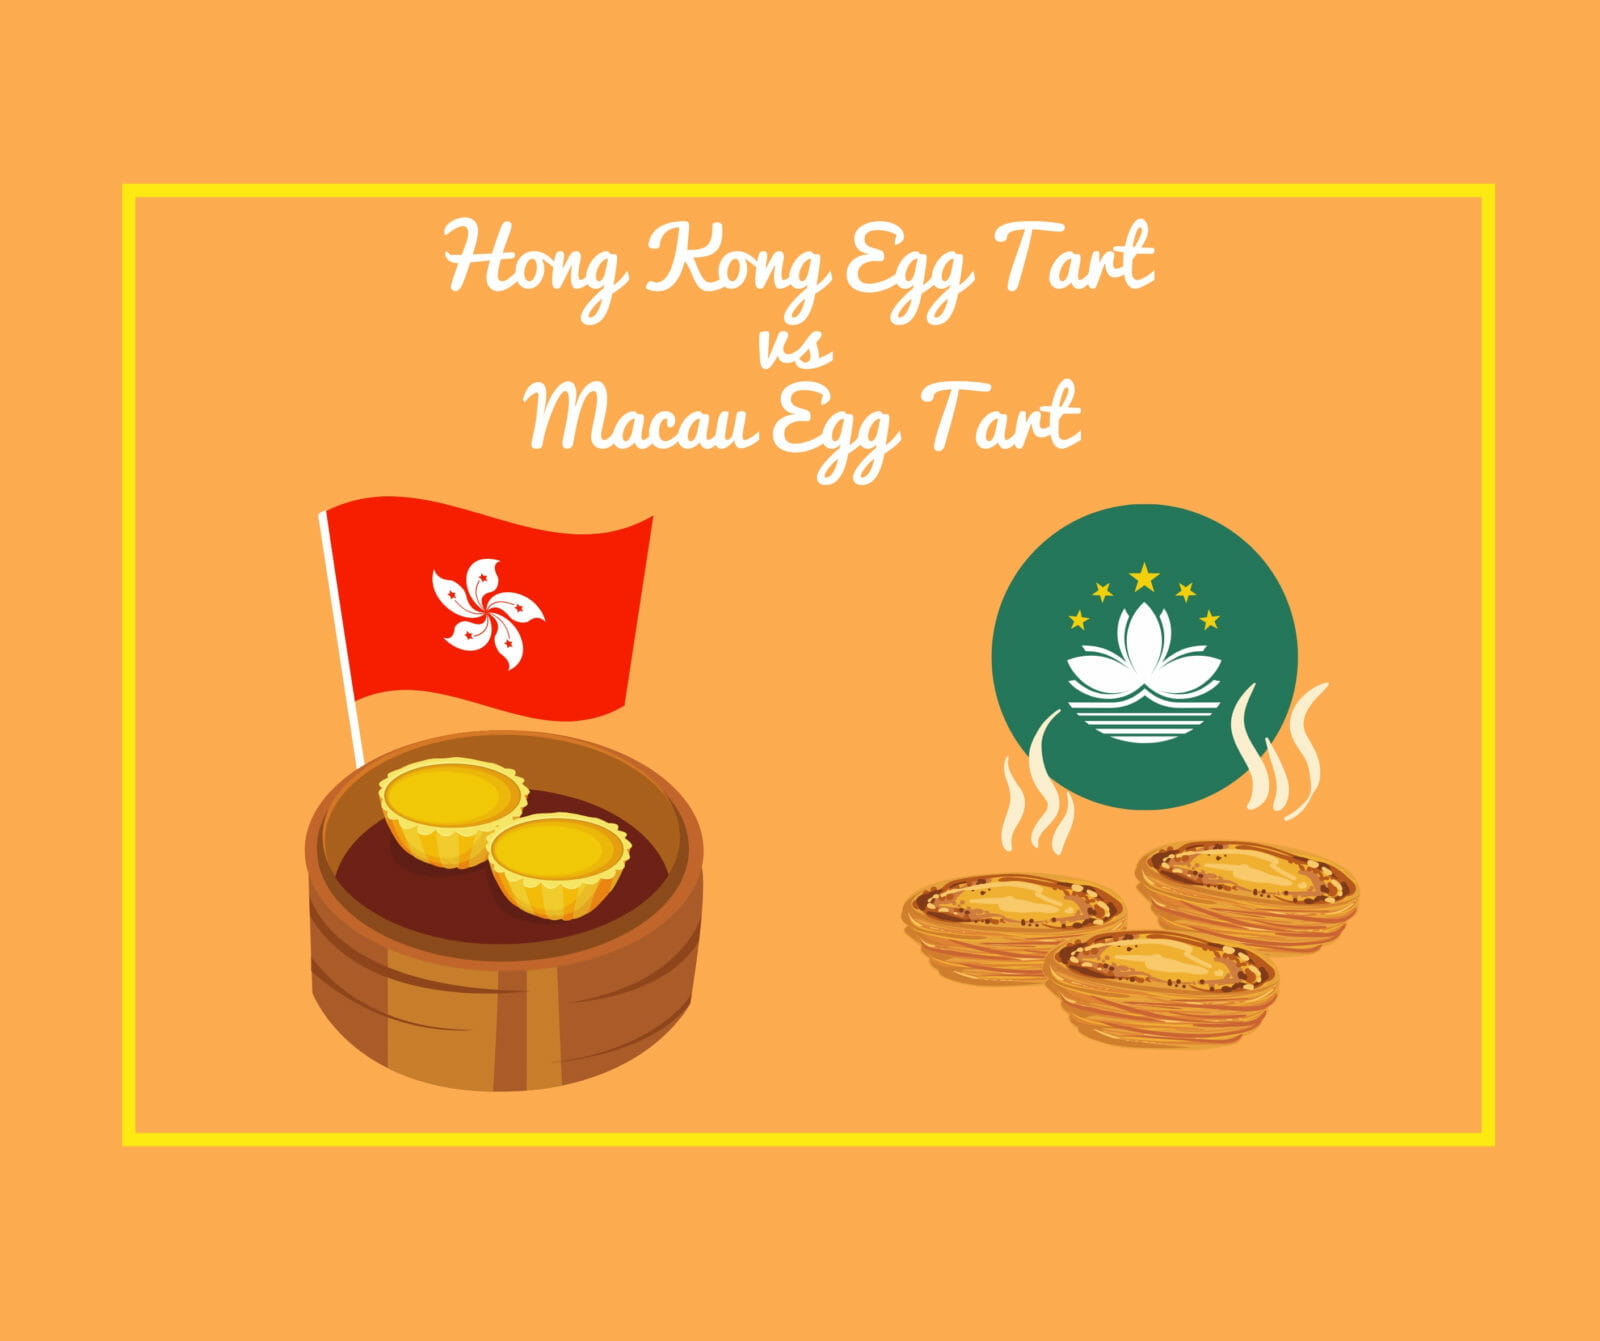 Hong Kong Egg Tart vs Macau Egg Tart